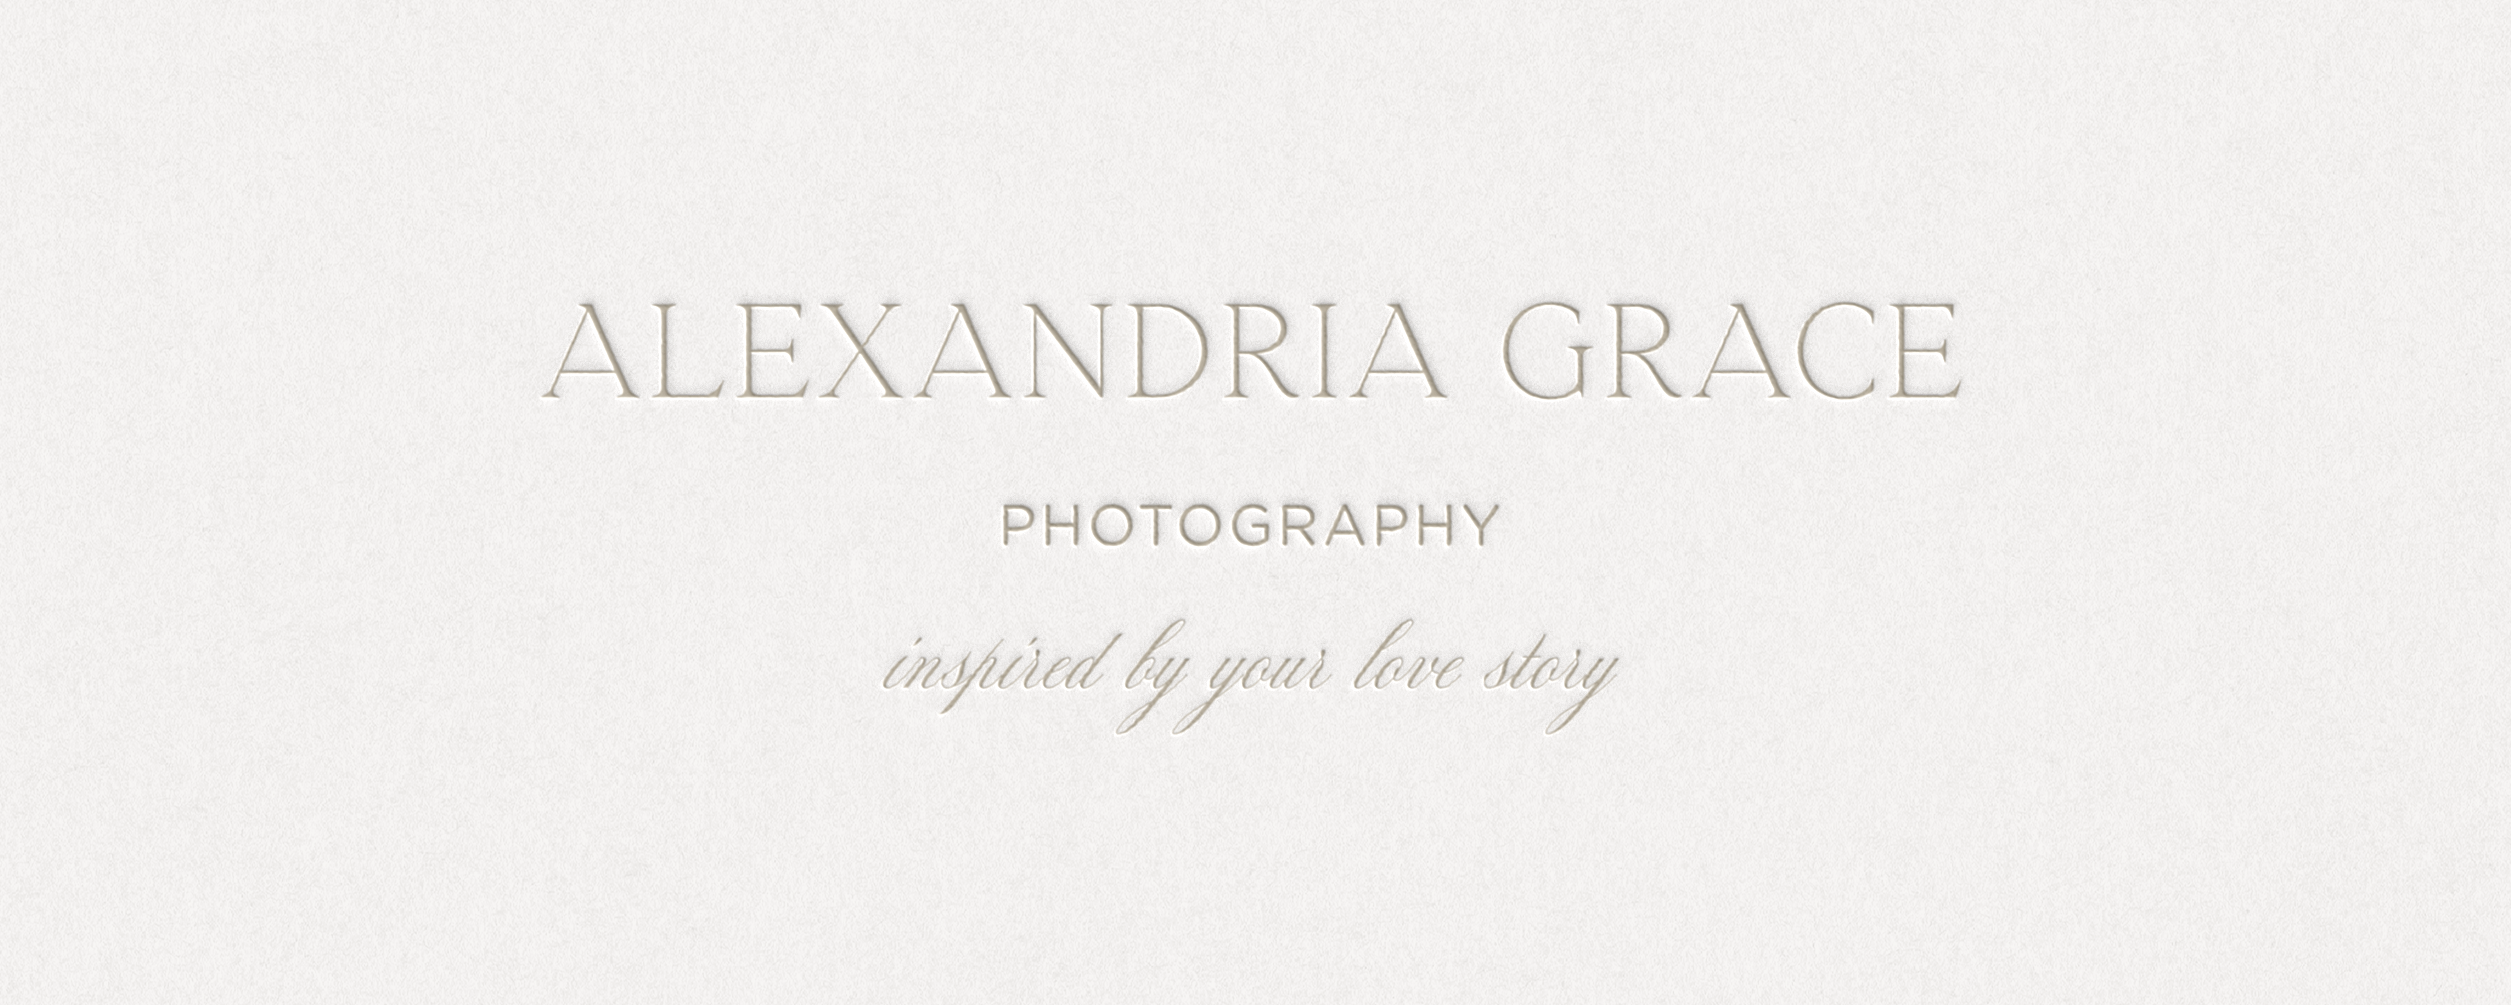 Elegant Brand Design for Photographer Alexandria Grace